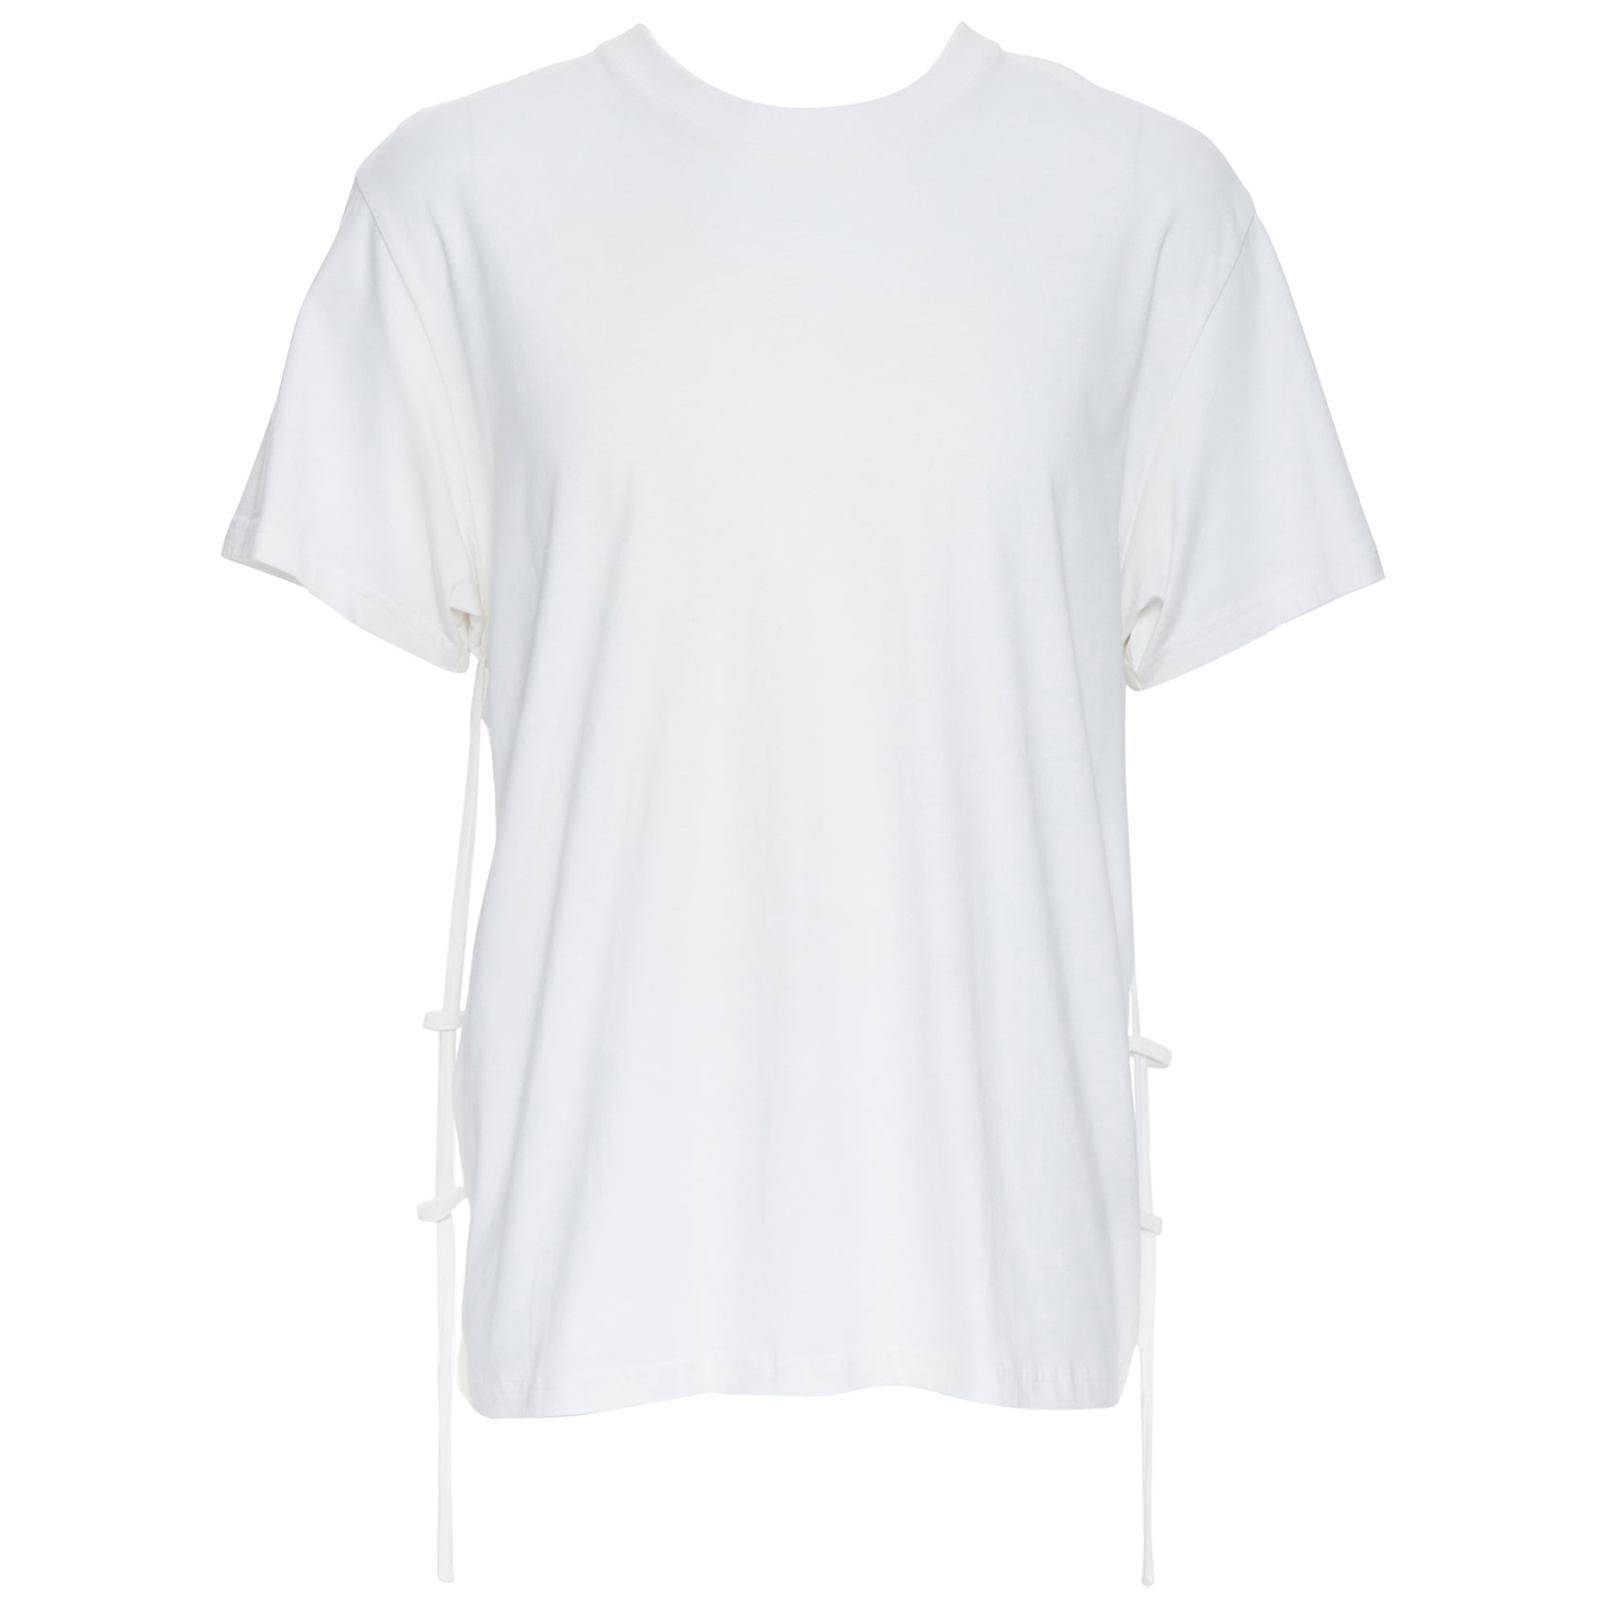 CRAIG GREEN white cotton weighed drawstring strap short sleeve t-shirt top M